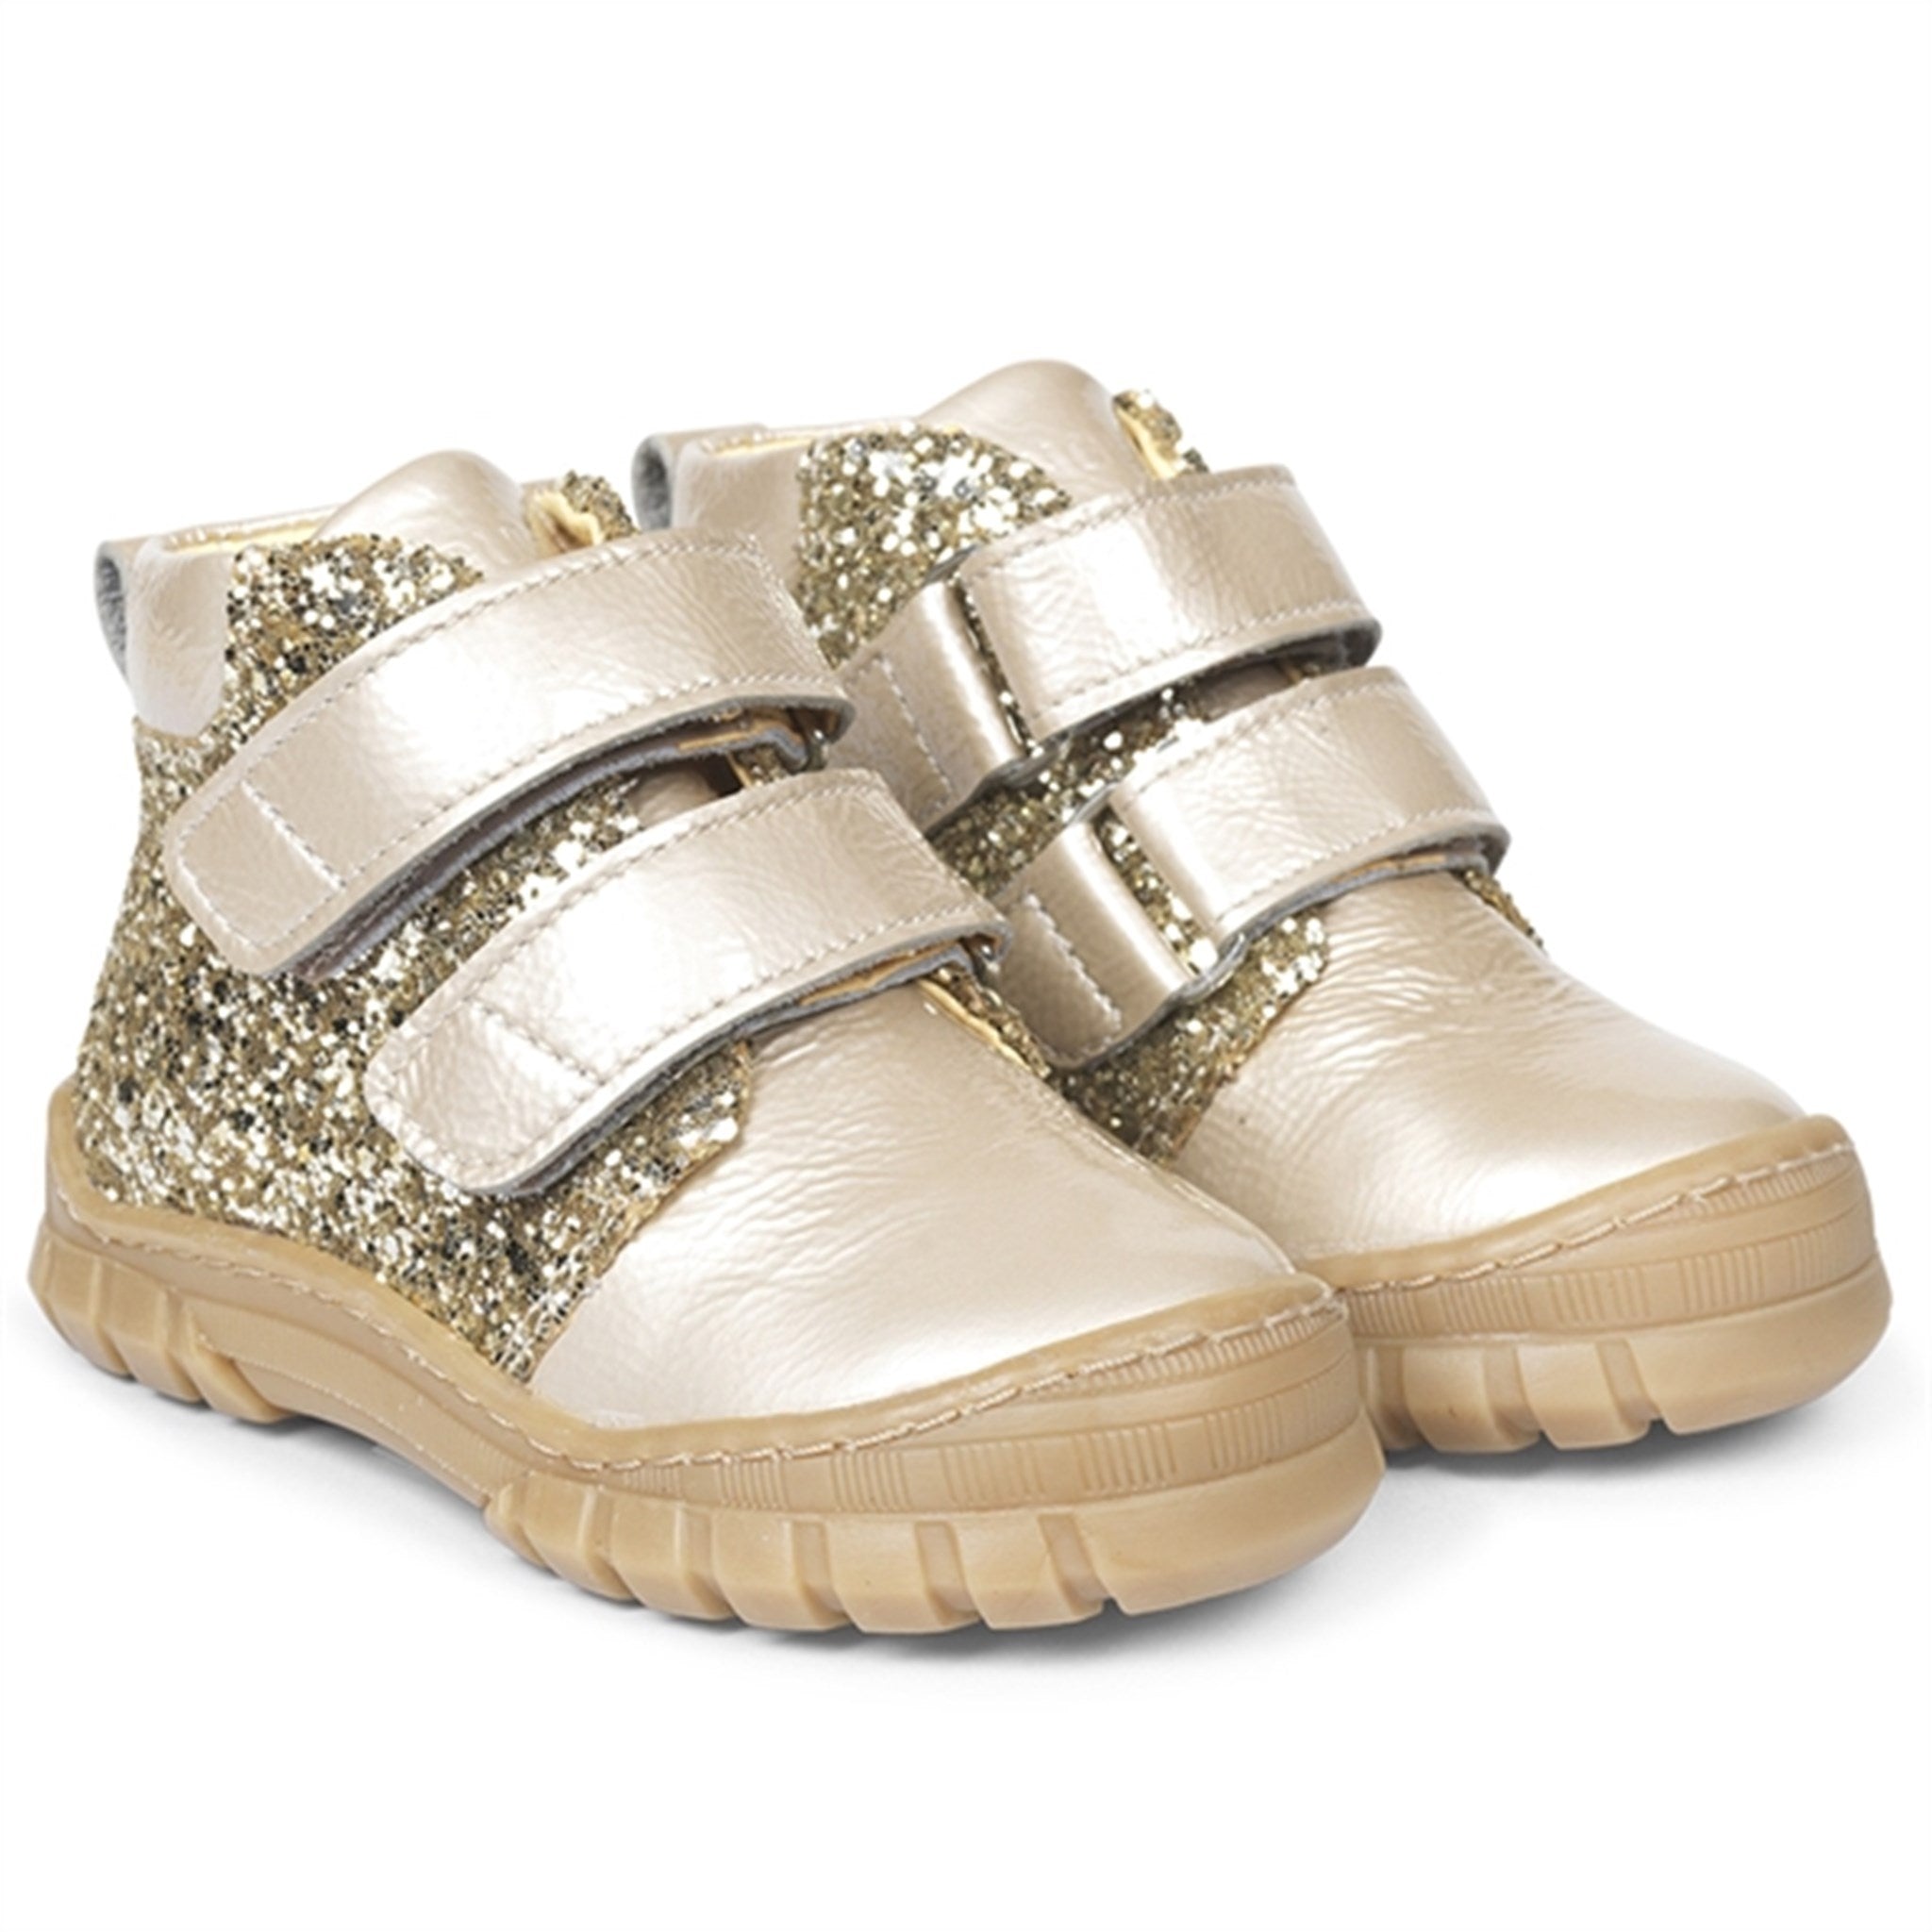 Angulus Beginner Shoes w Velcro Creme/Champagne Glitter